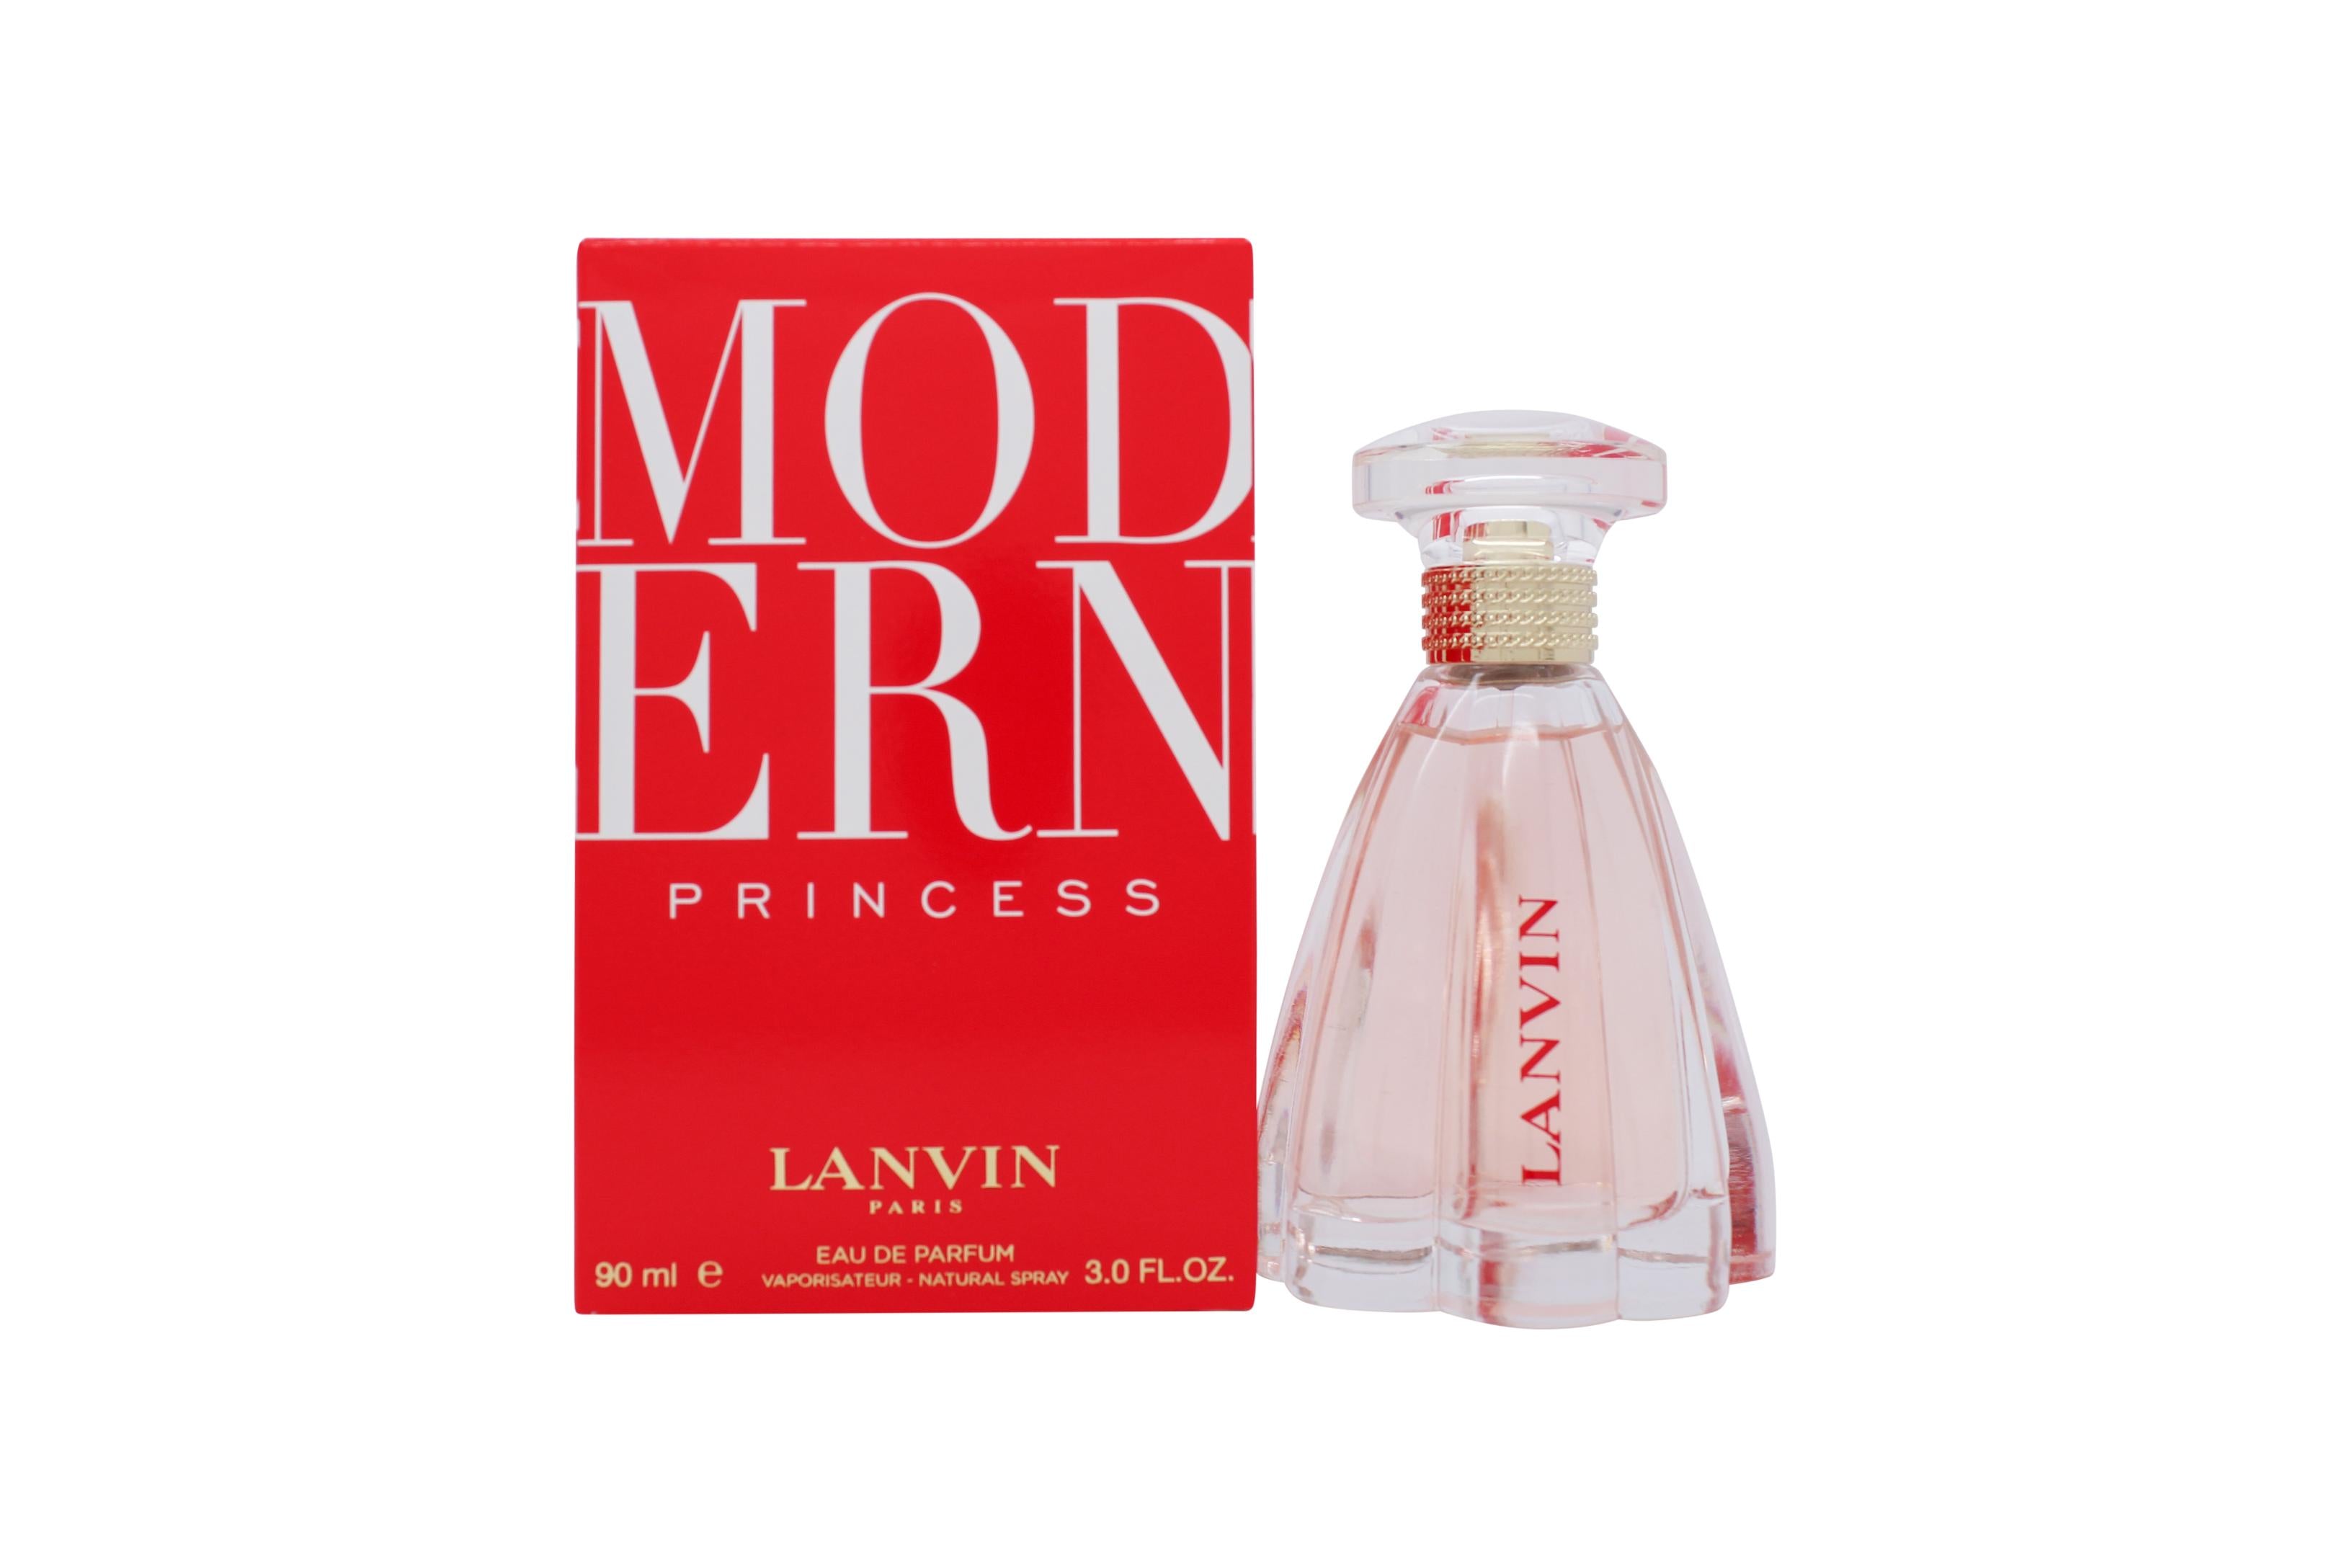 View Lanvin Modern Princess Eau de Parfum 90ml Spray information